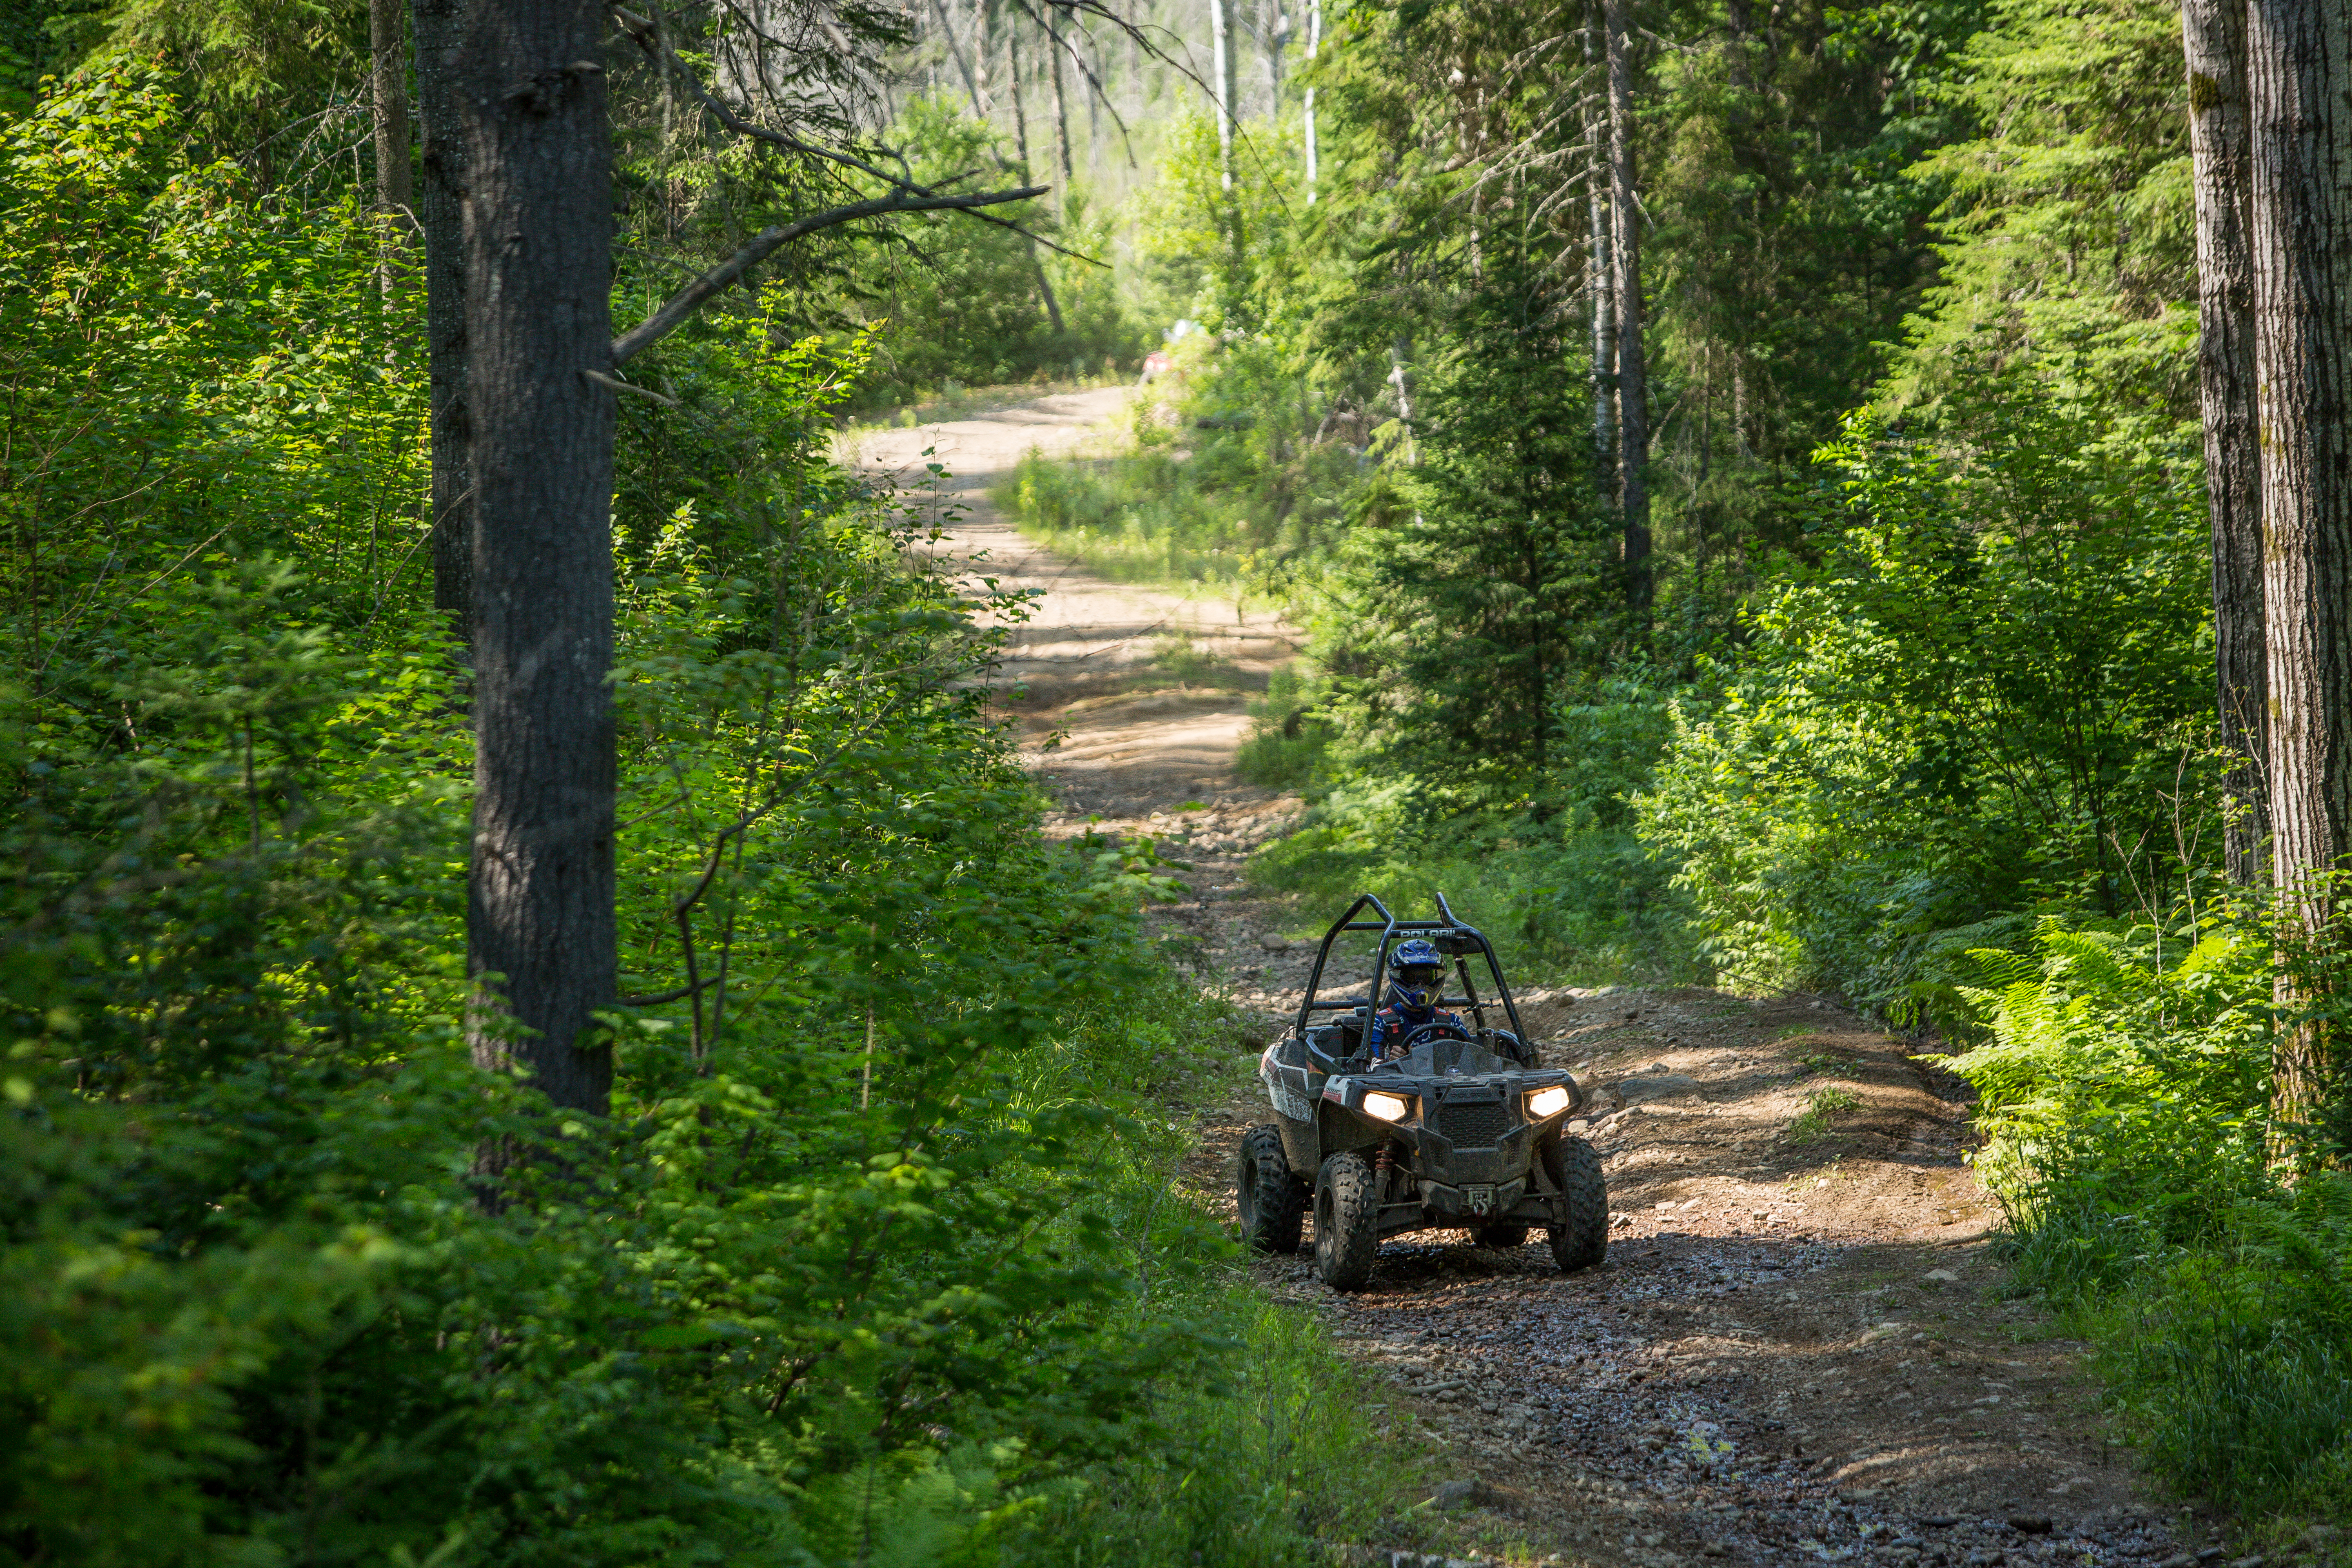 A long shot of a UTV driving down a dirt trail that winds through a lush green forest.